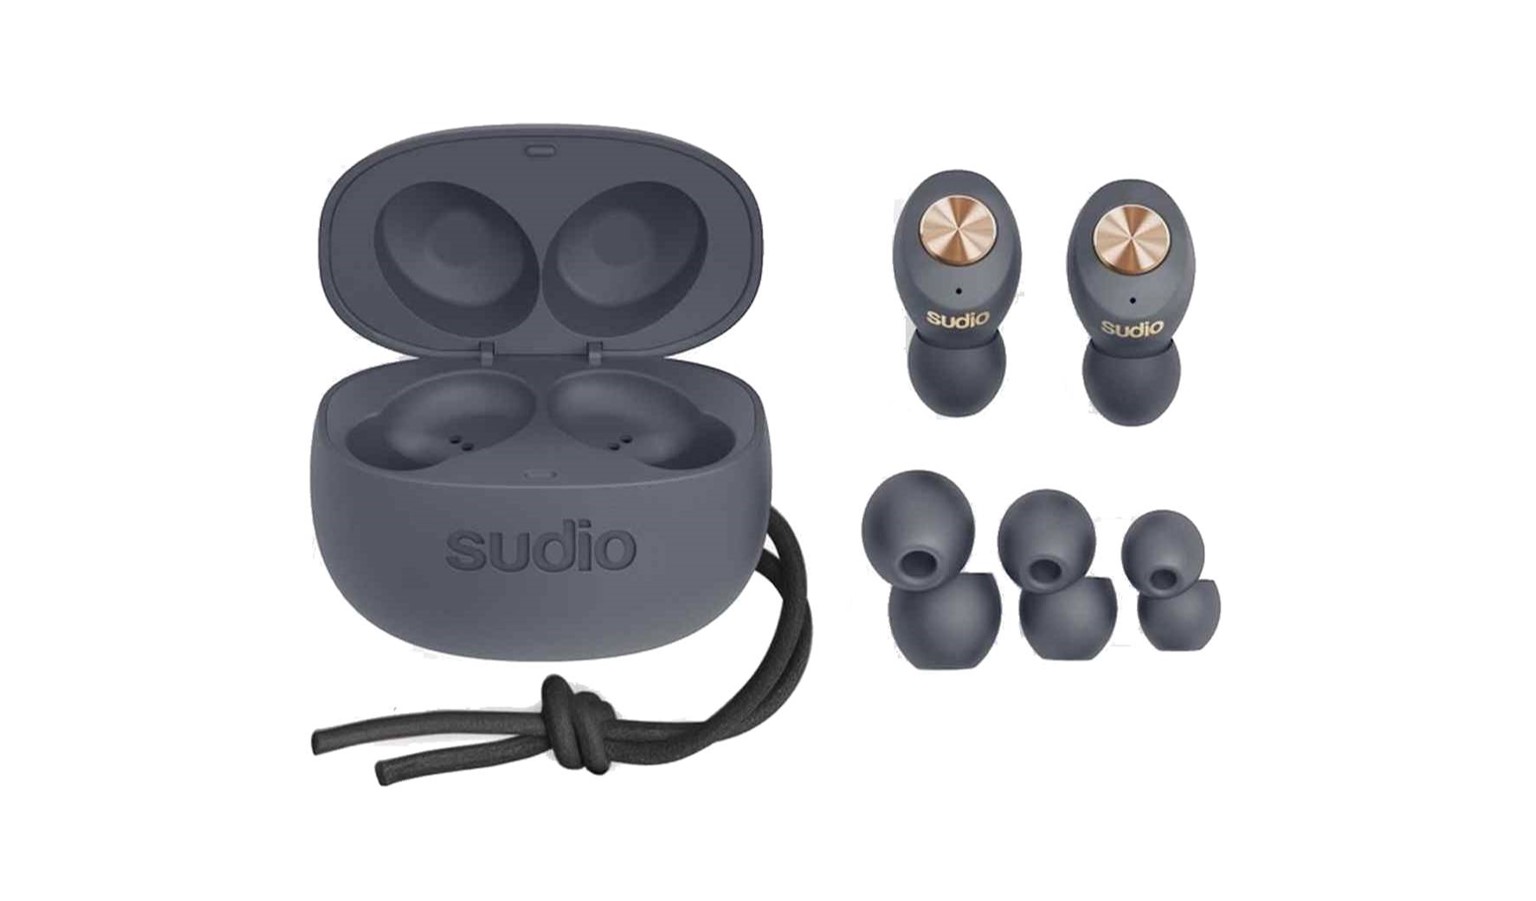 sudio wireless earbuds